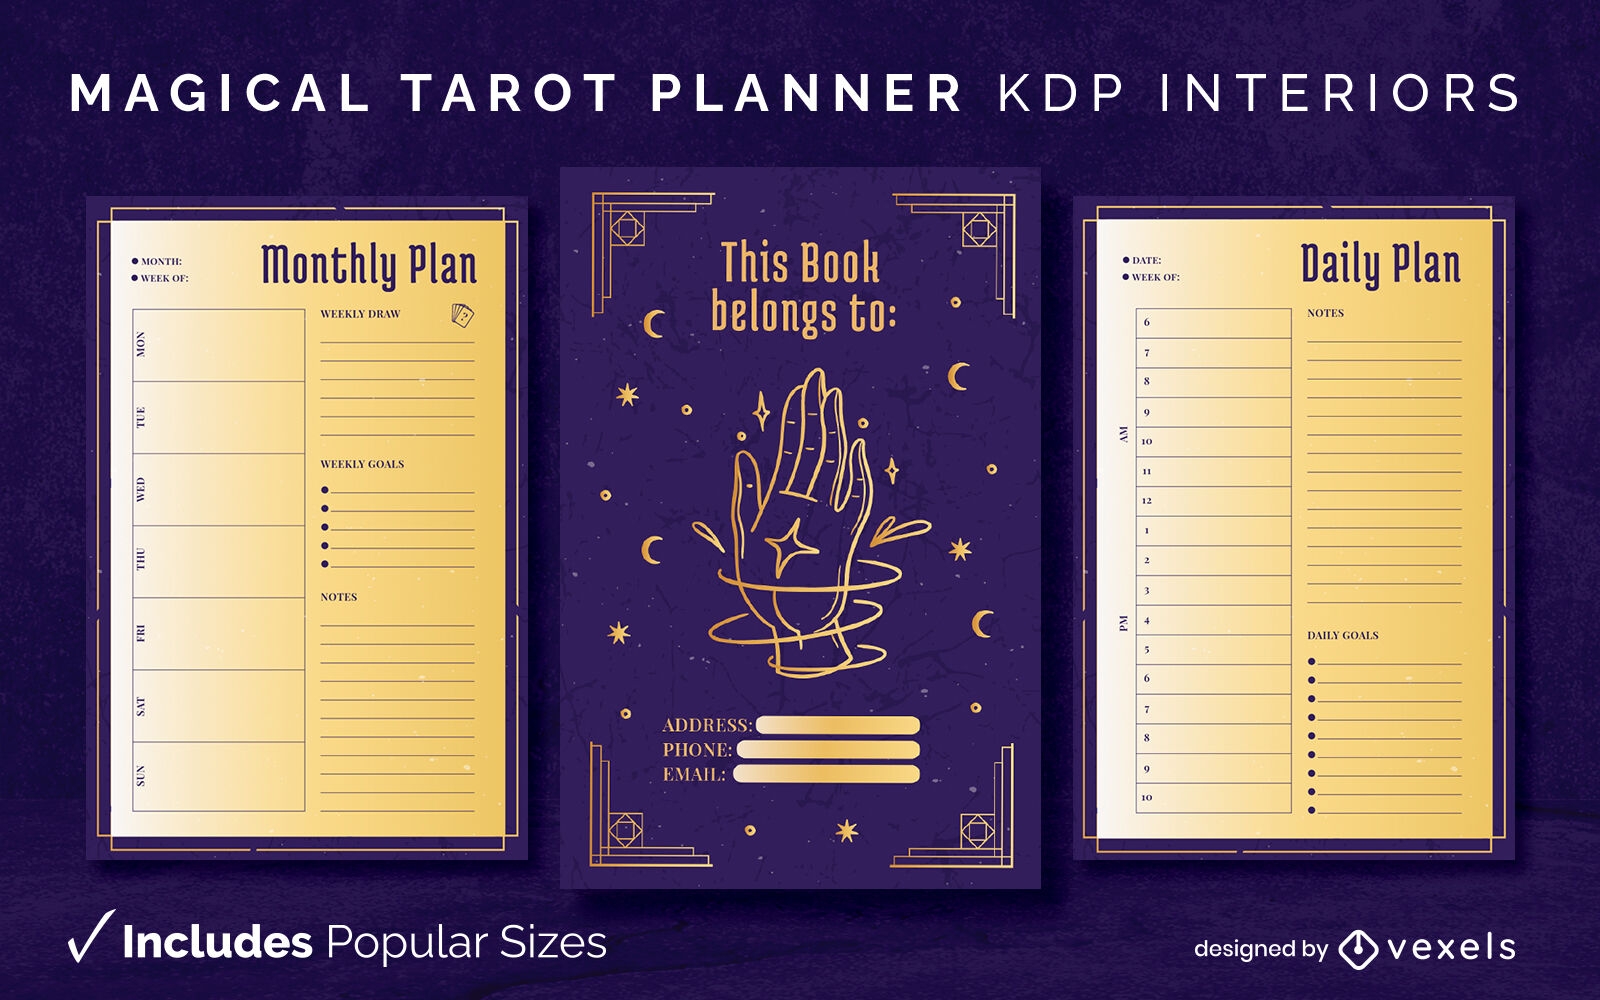 Magical tarot planner KDP interior template